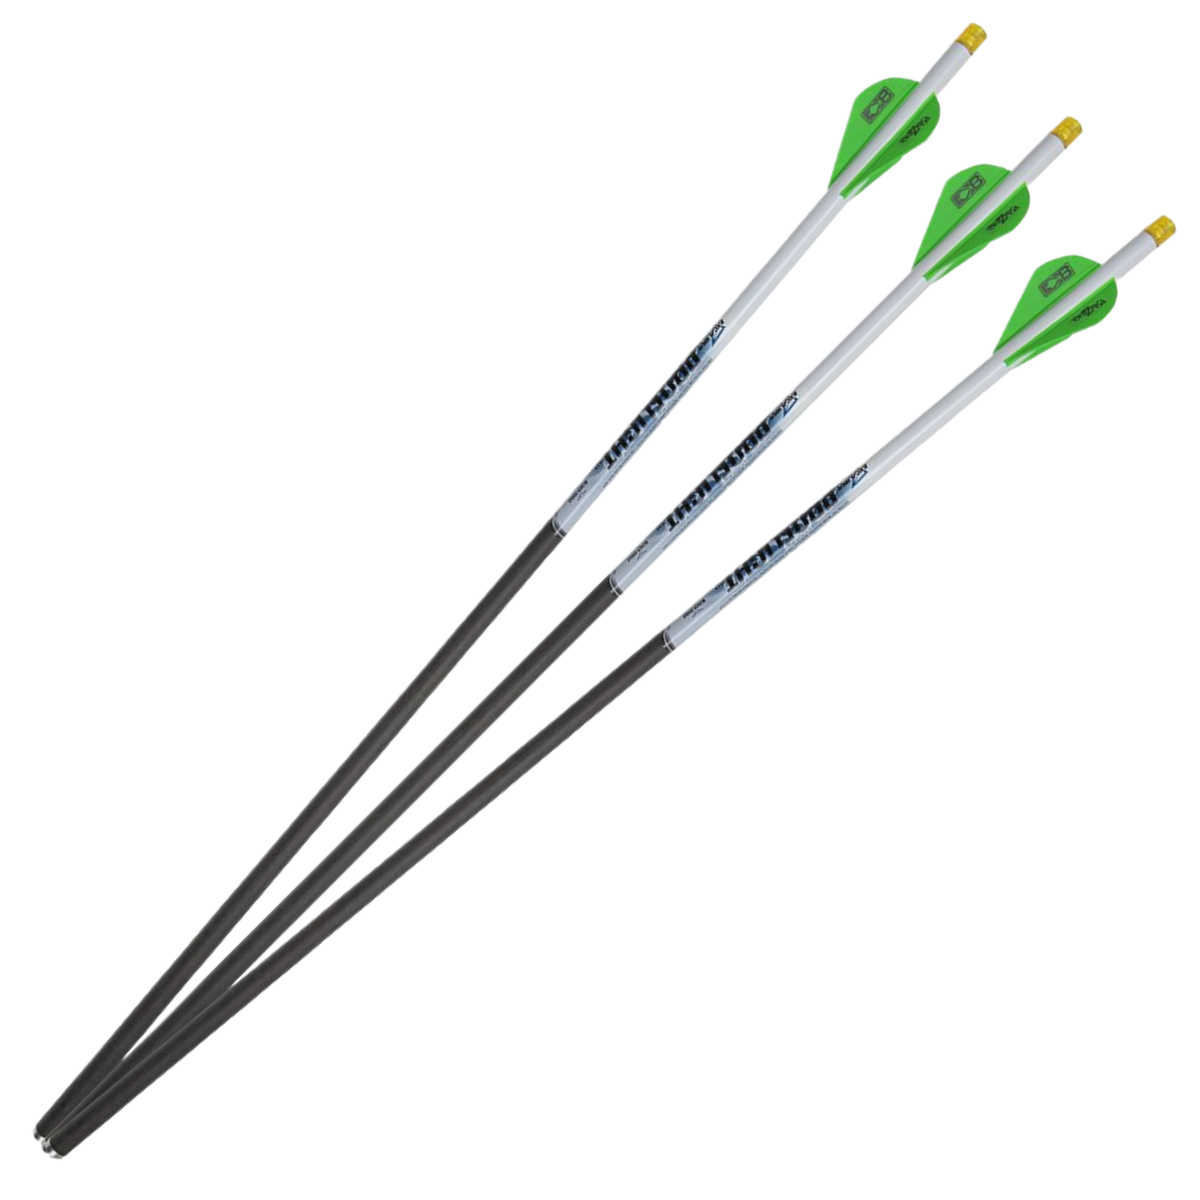 Excalibur Proflight Illuminated Carbon Arrow 20" - Pack of 3 - Fast UK Shipping | Tactical Archery UK